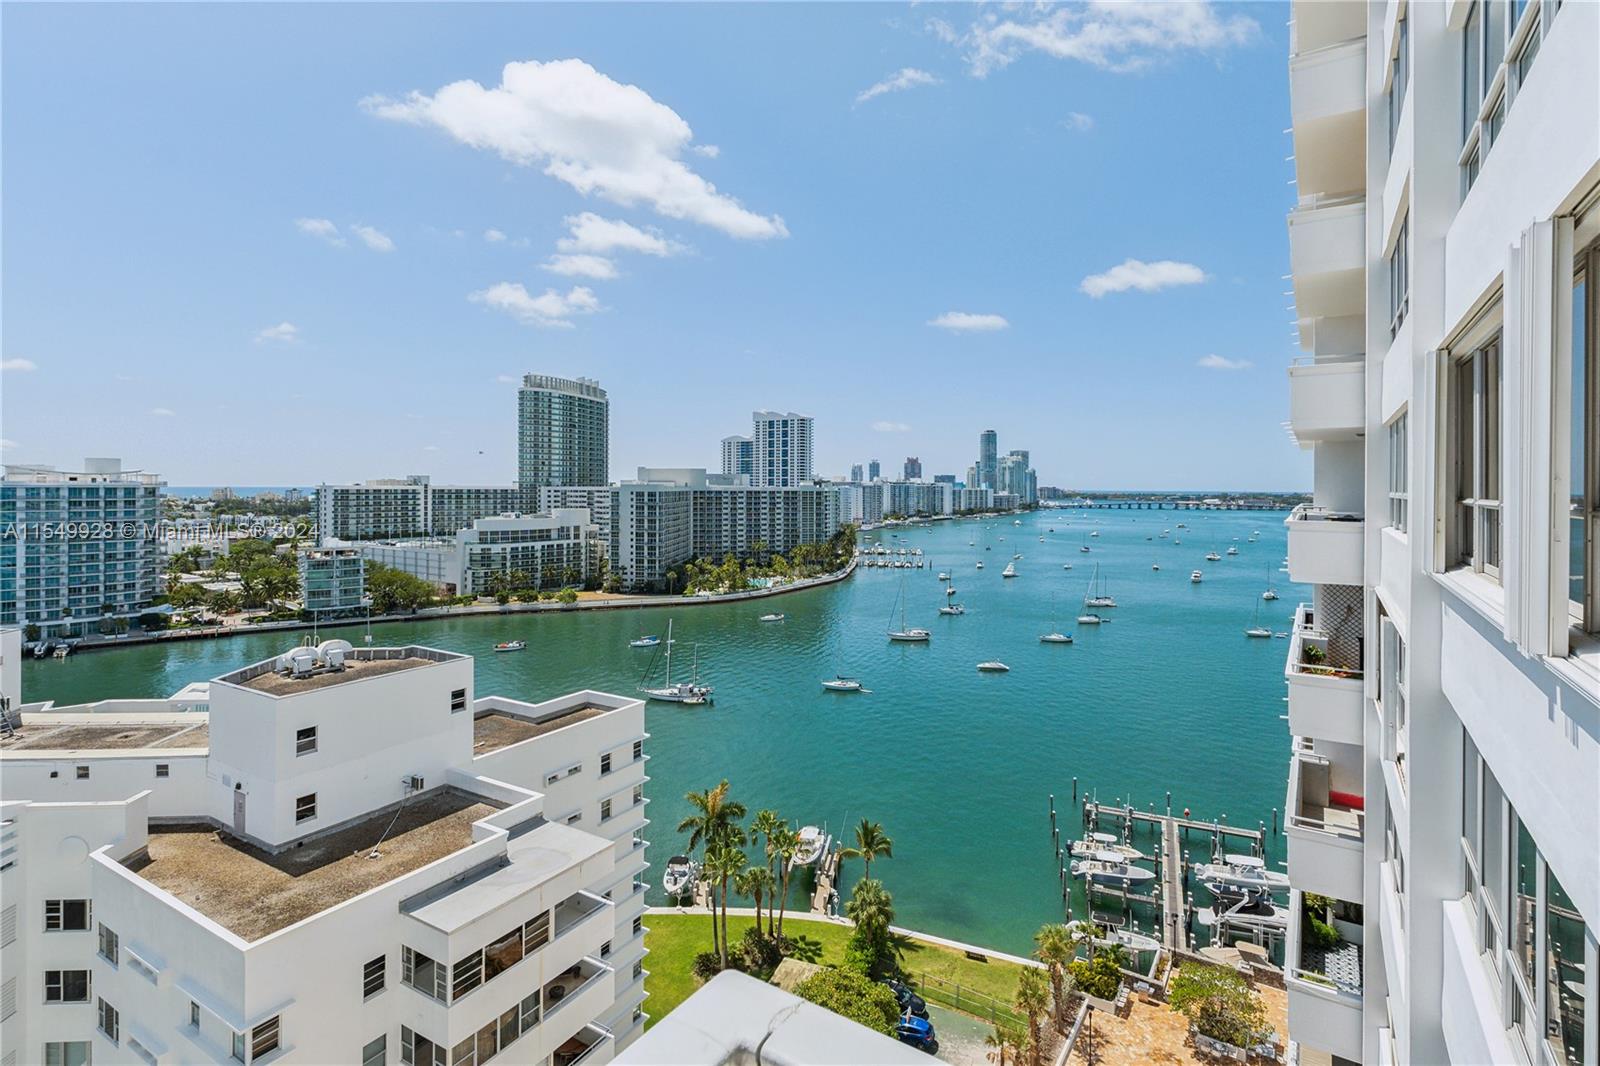 Property for Sale at 11 Island Ave 1708, Miami Beach, Miami-Dade County, Florida - Bedrooms: 2 
Bathrooms: 2  - $990,000